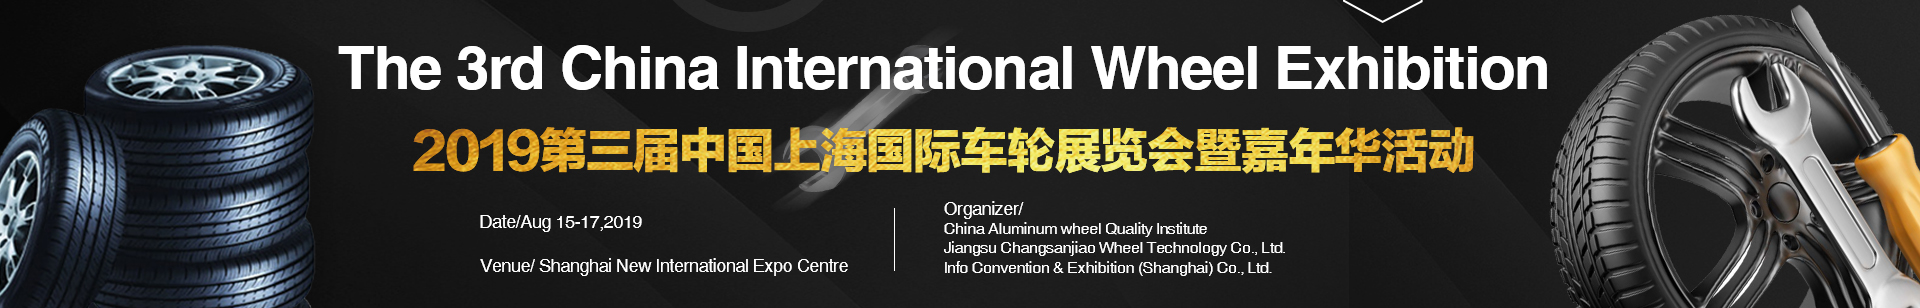 The 3rd China International Wheel Exhibition